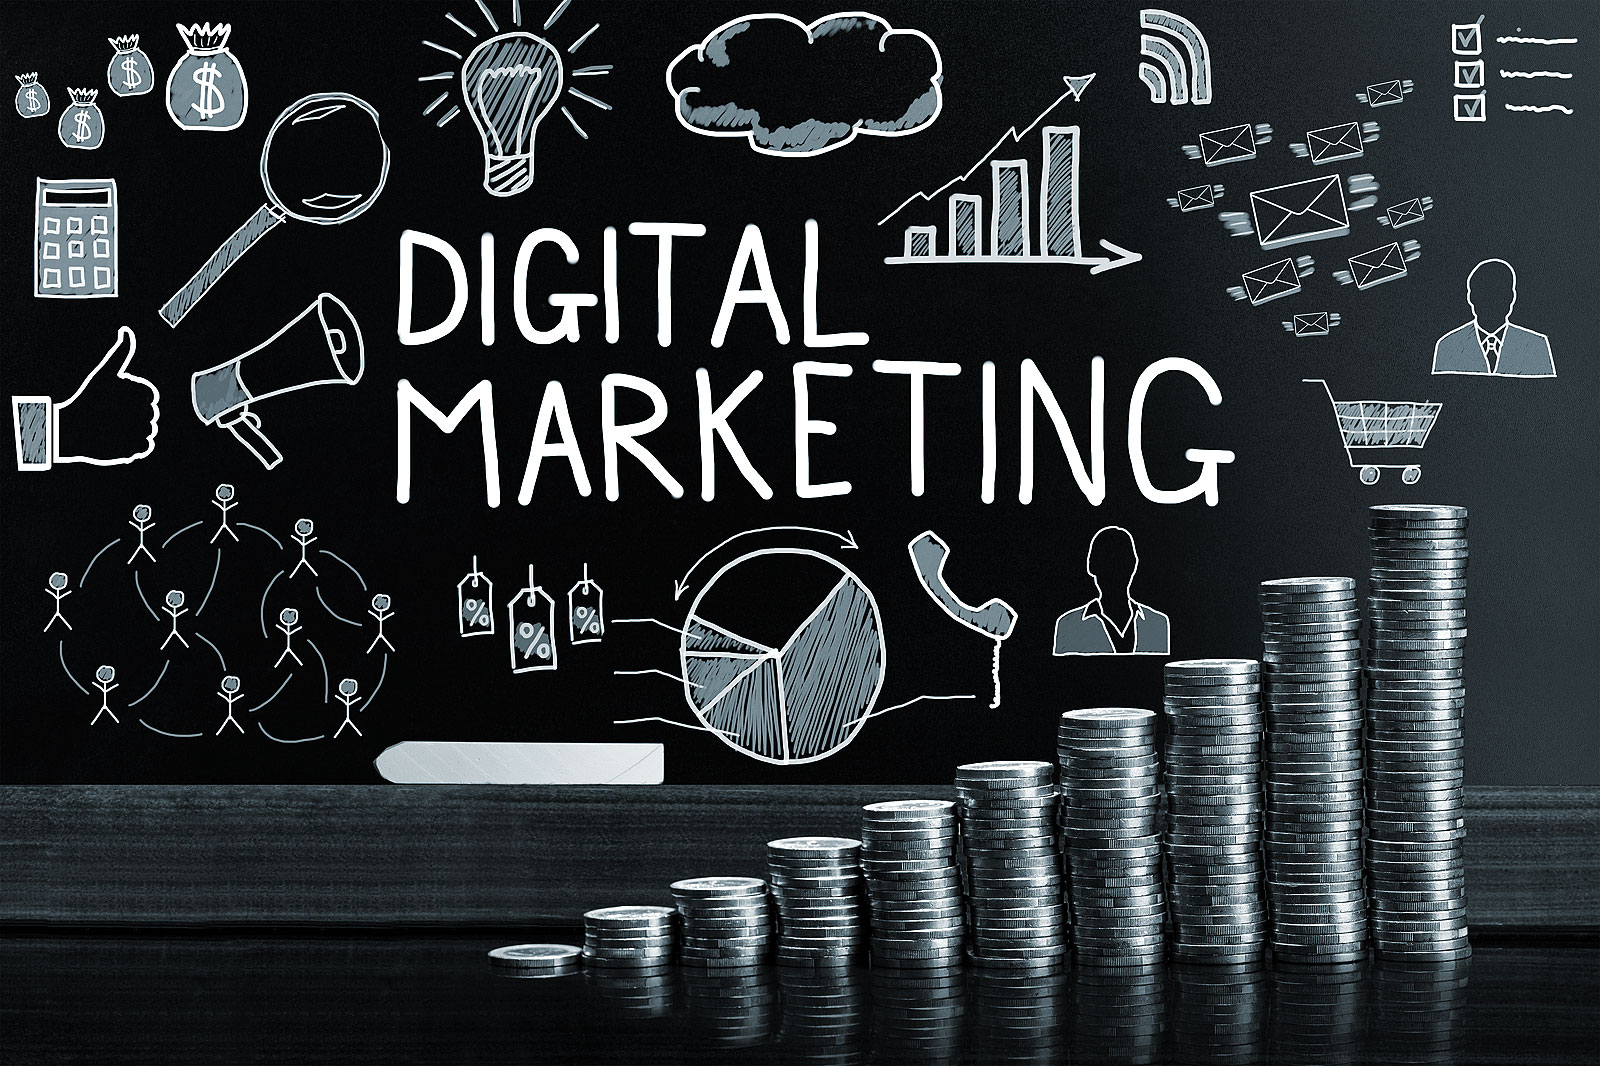 digital marketing courses